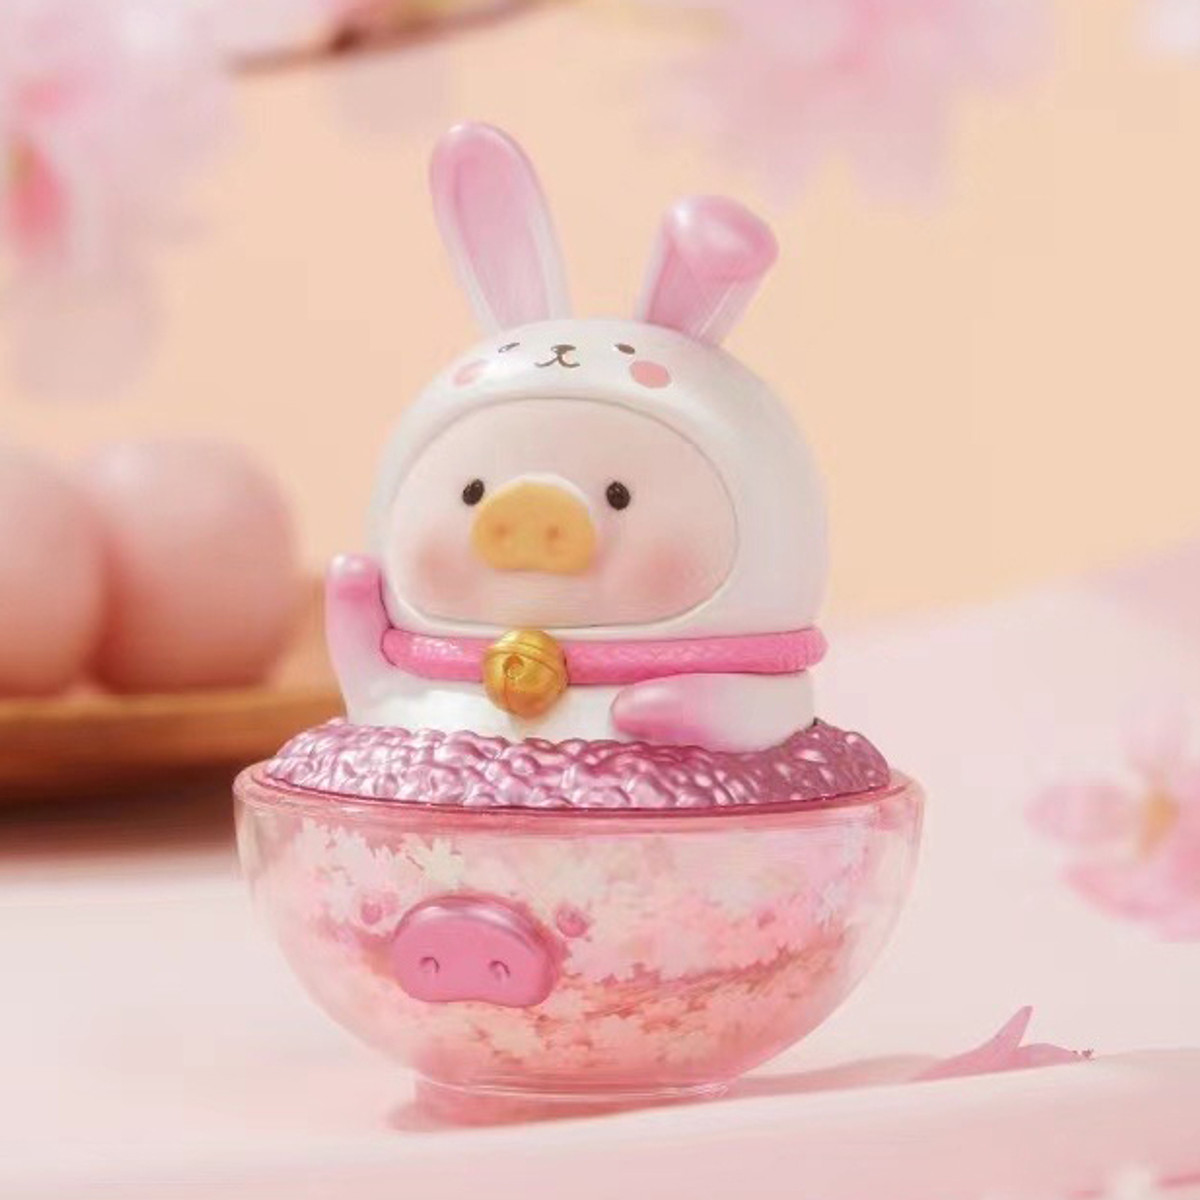 Lulu the Piggy Year of The Rabbit Golden Rice Bowl Sakura + Sakura 2 Blindbox series set